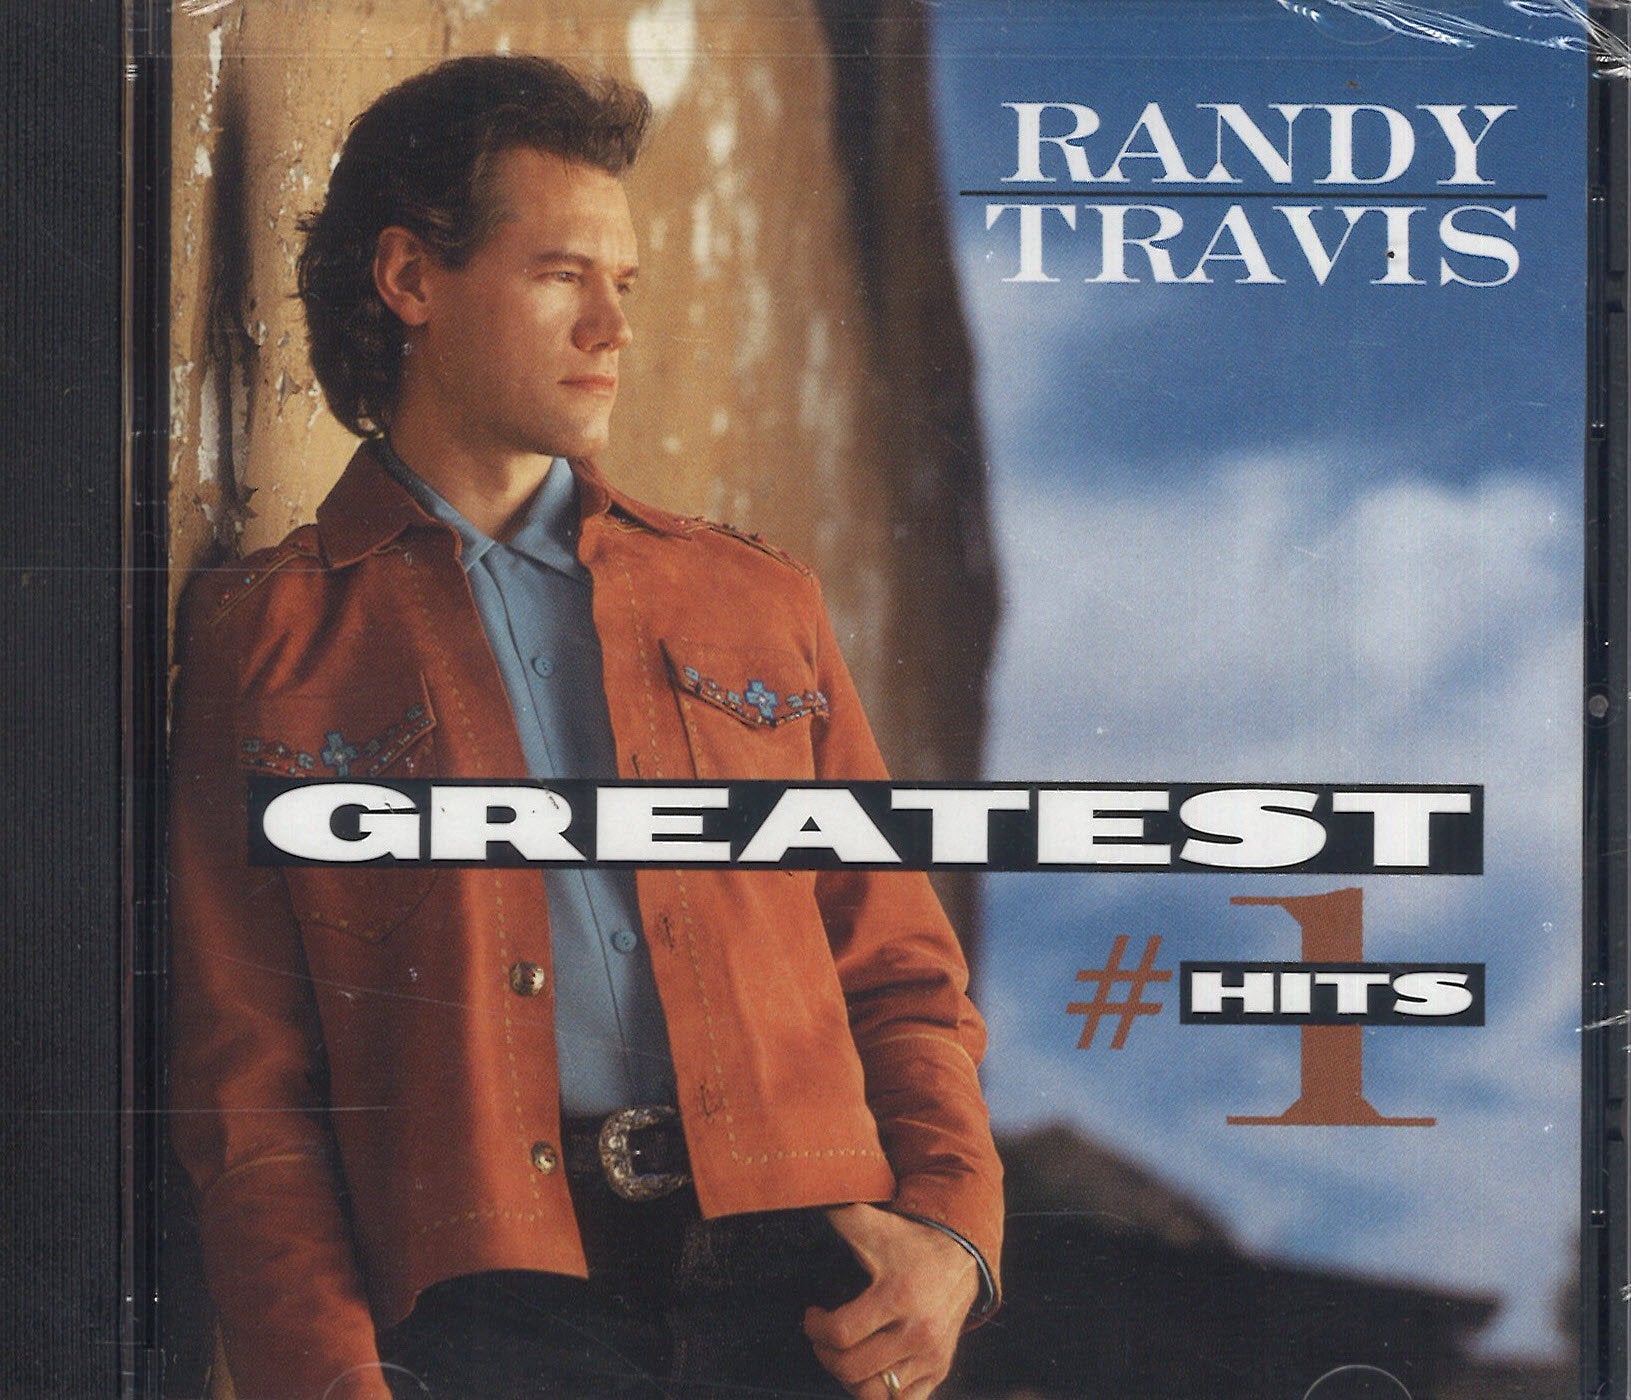 Randy Travis Greatest #1 Hits